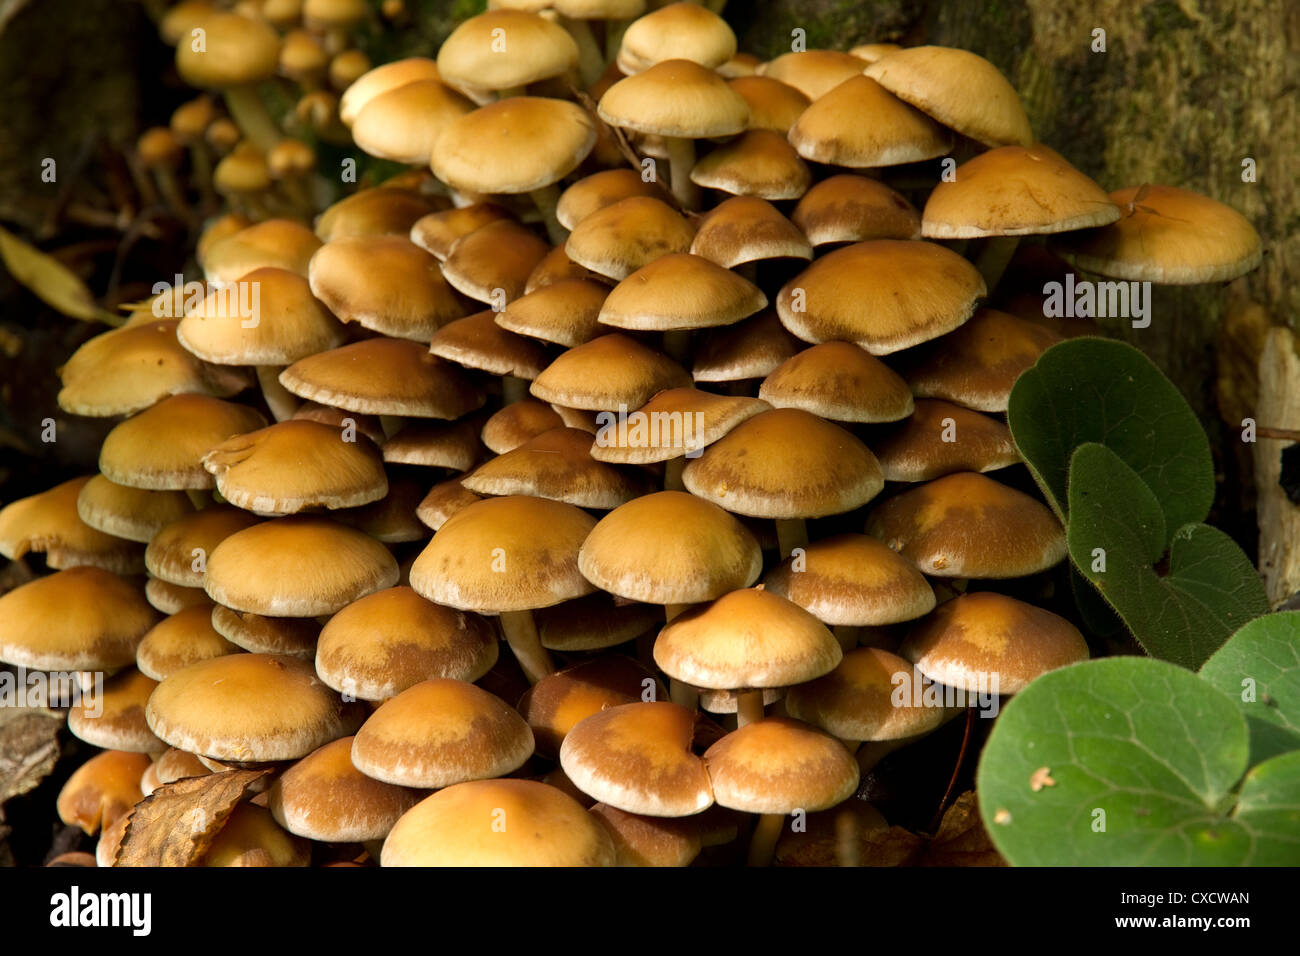 large group of autumn mushrooms on the tree stump, close up Stock Photo